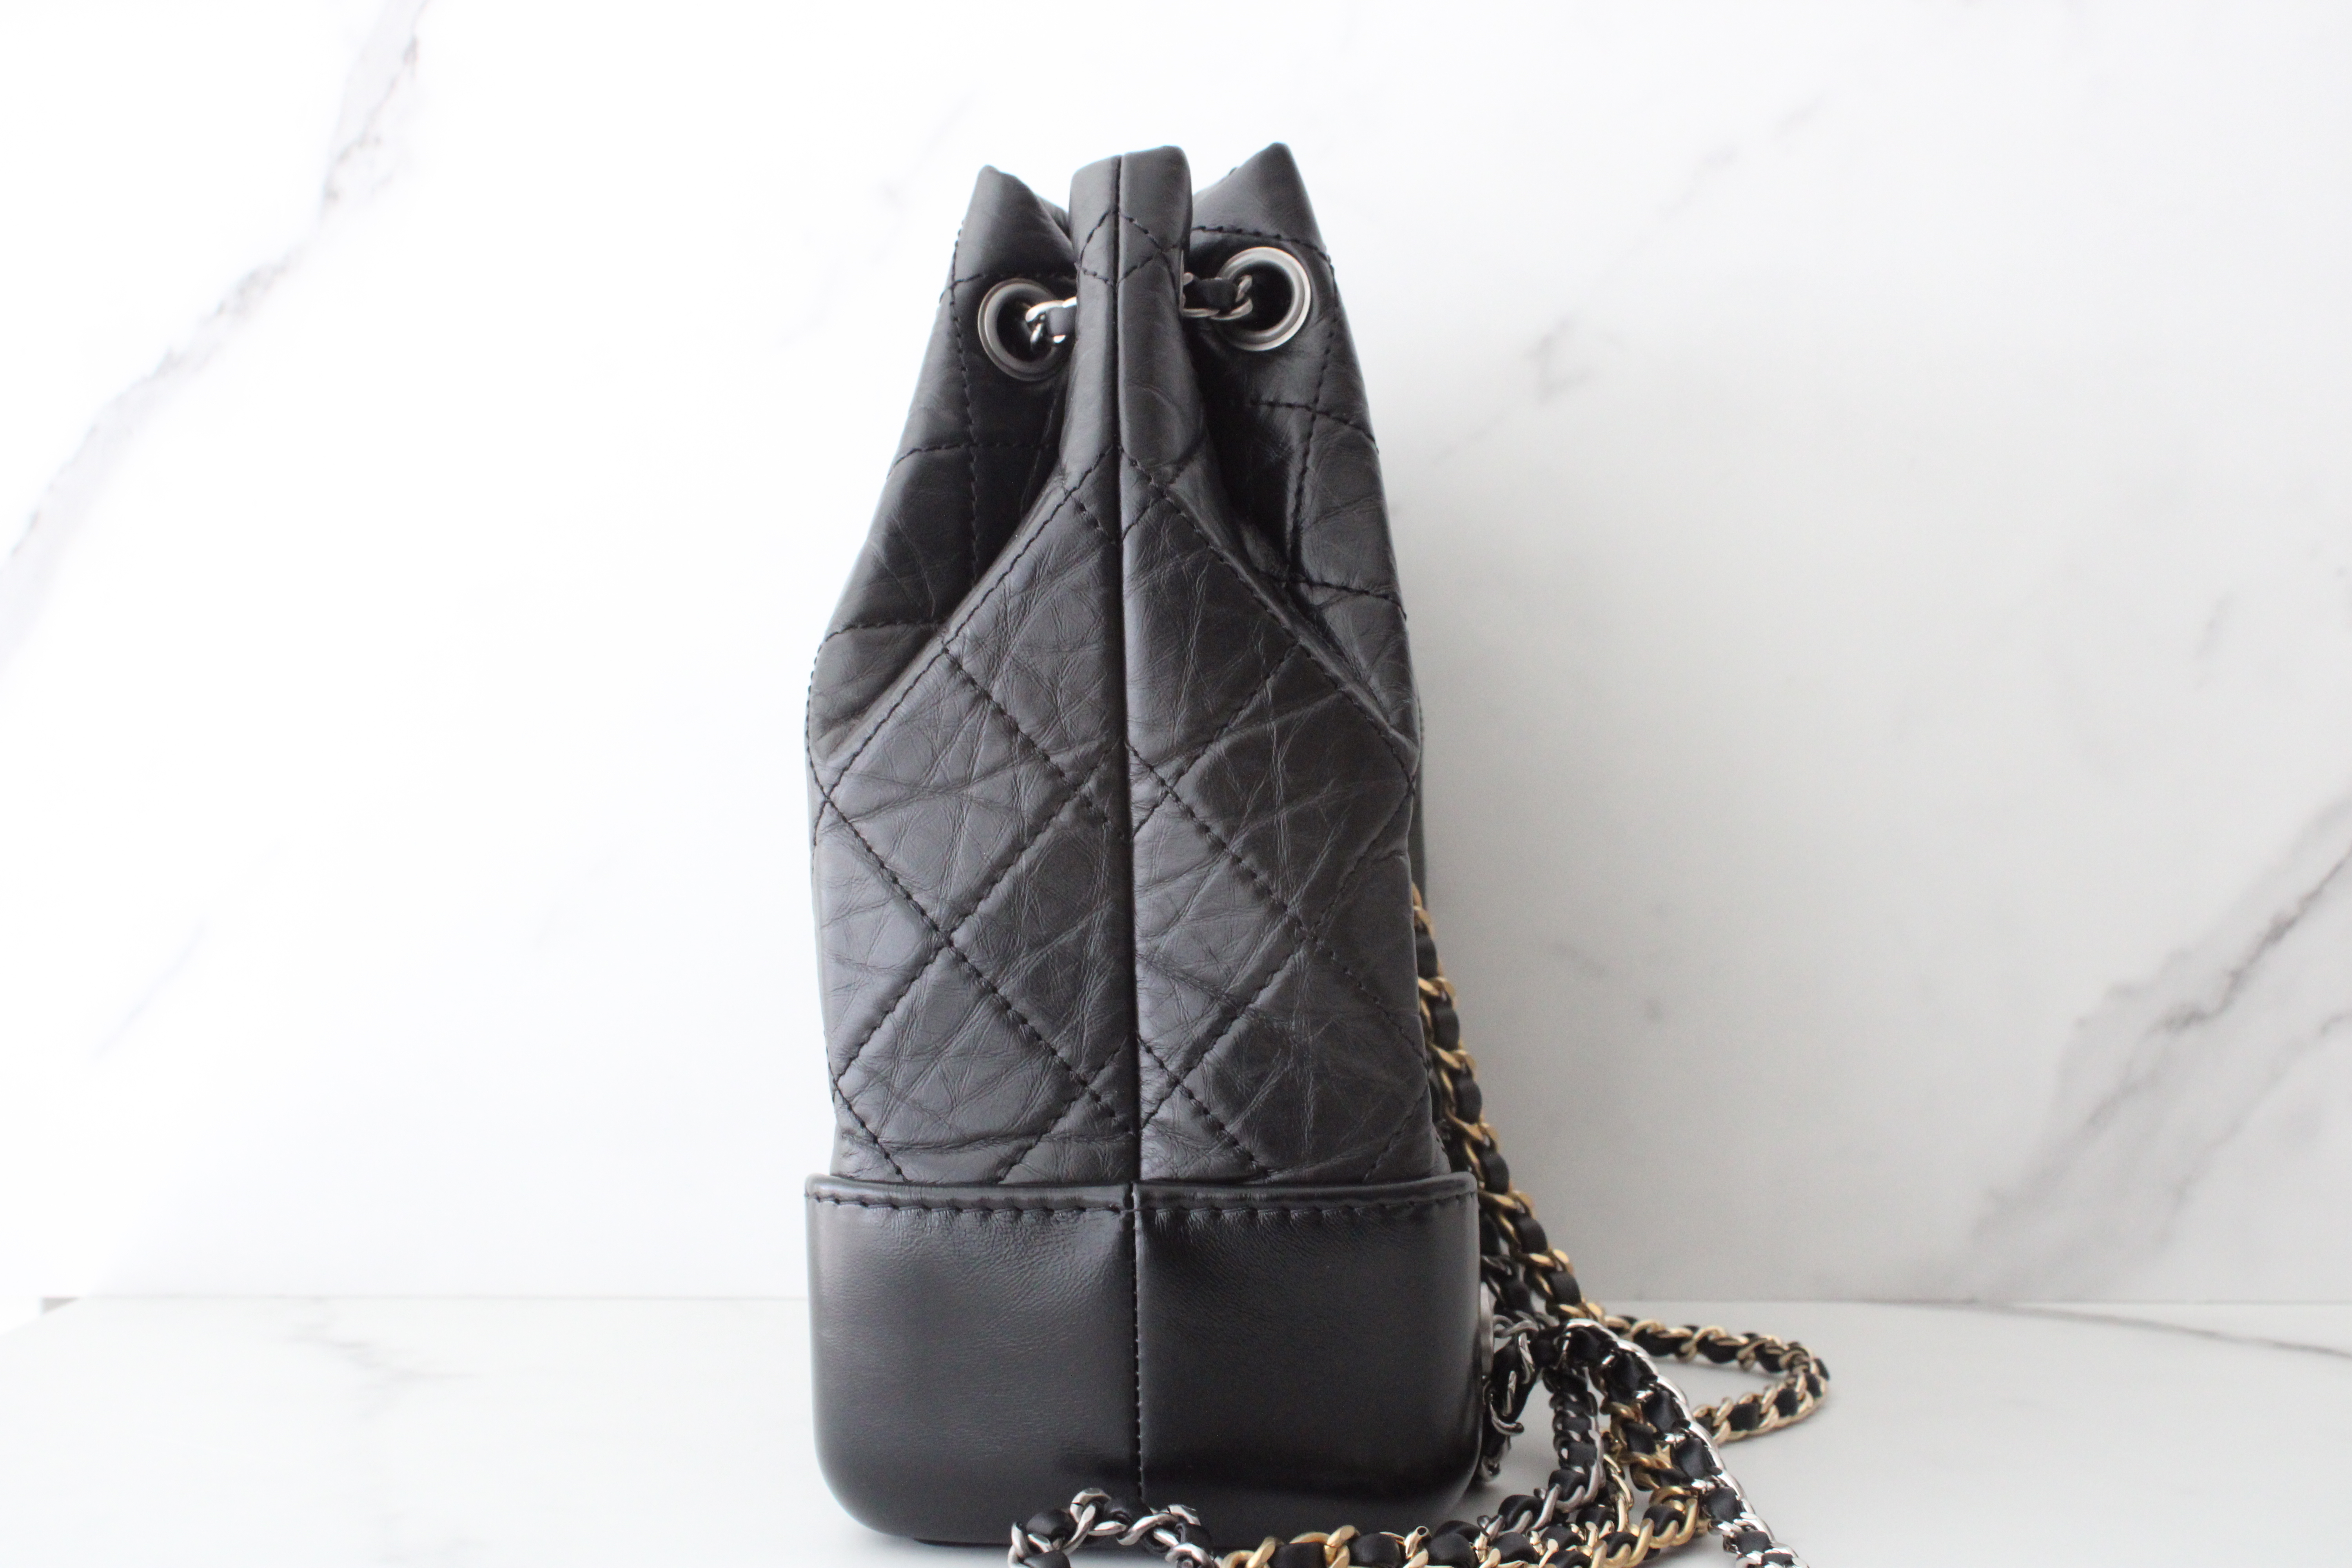 Yves Saint Laurent Black Chevron Quilted Leather Monogram Tote Bag